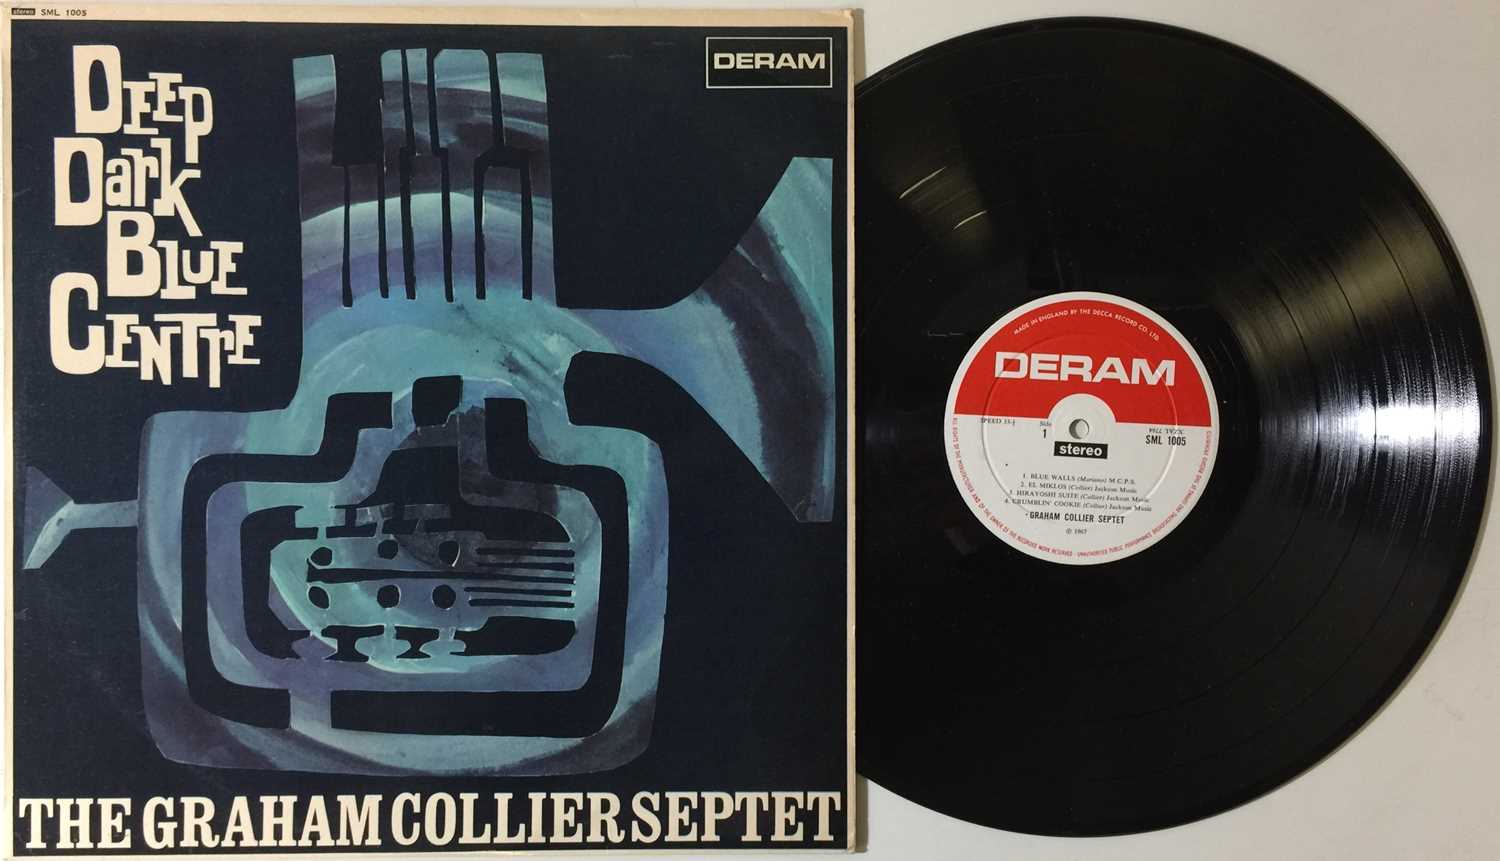 THE GRAHAM COLLIER SEPTET - DEEP DARK BLUE CENTRE LP (UK DERAM - SML 1005)